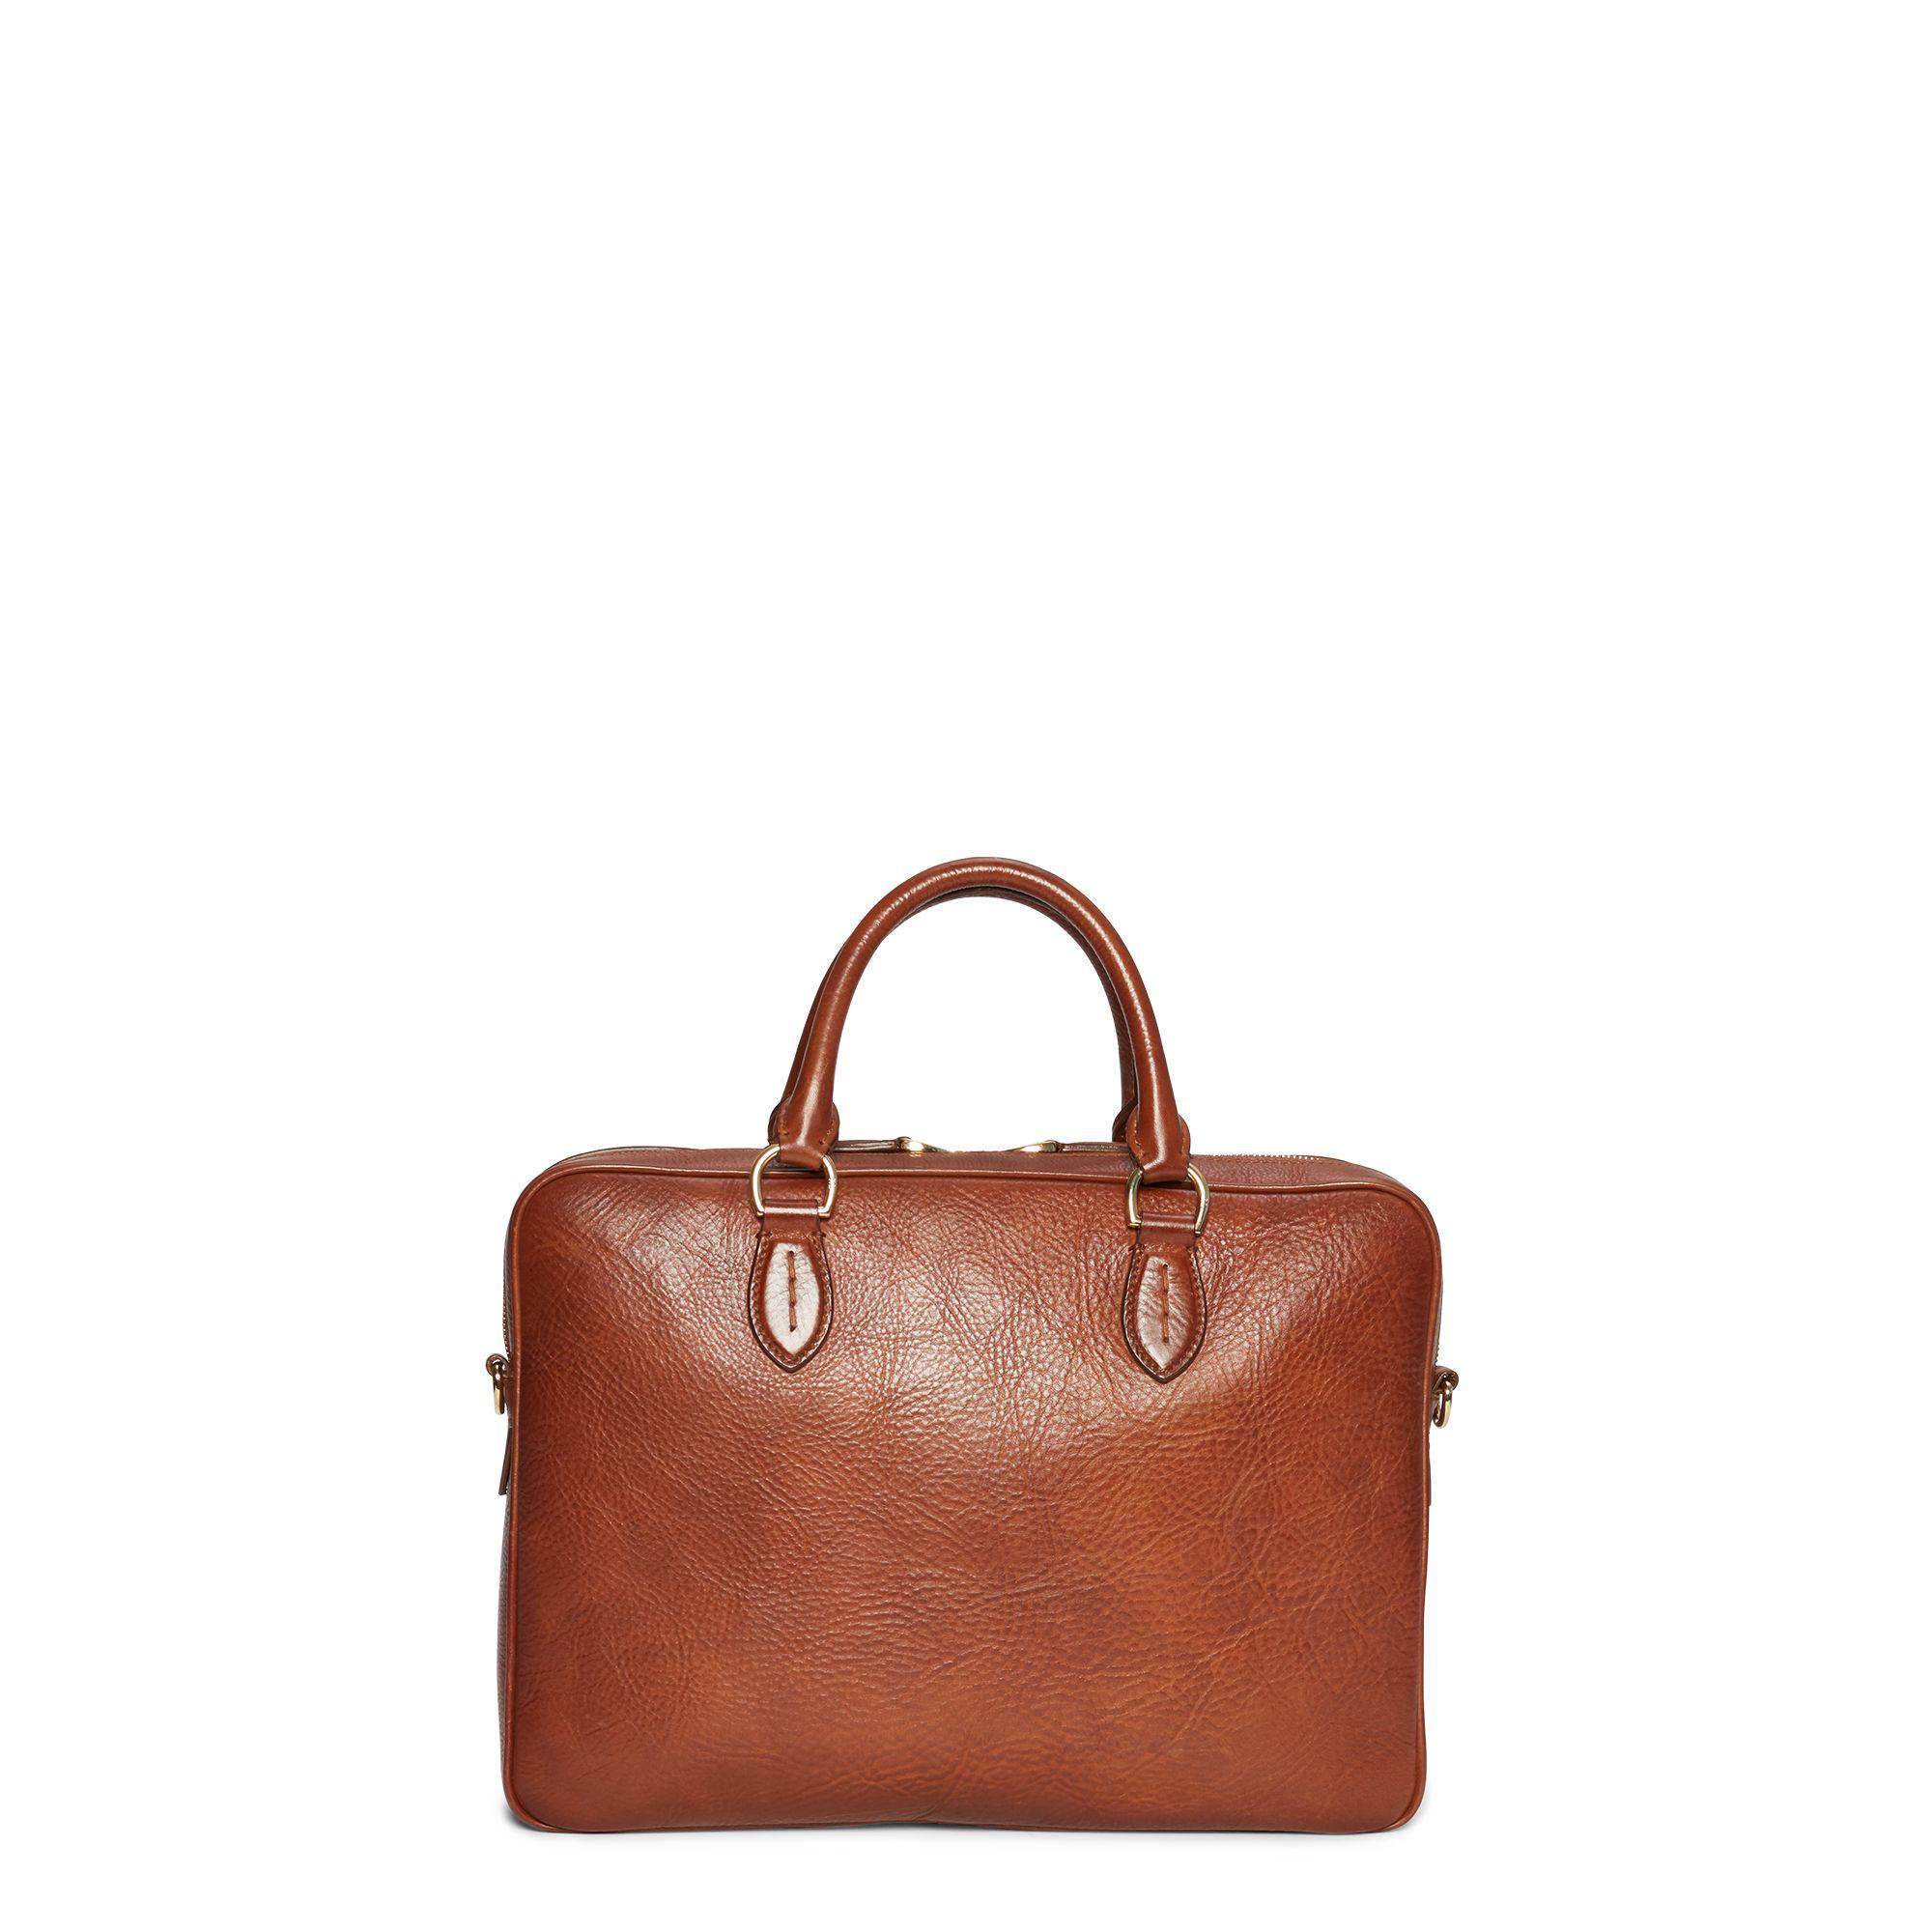 Lyst - Ralph Lauren Leather Briefcase in Brown for Men